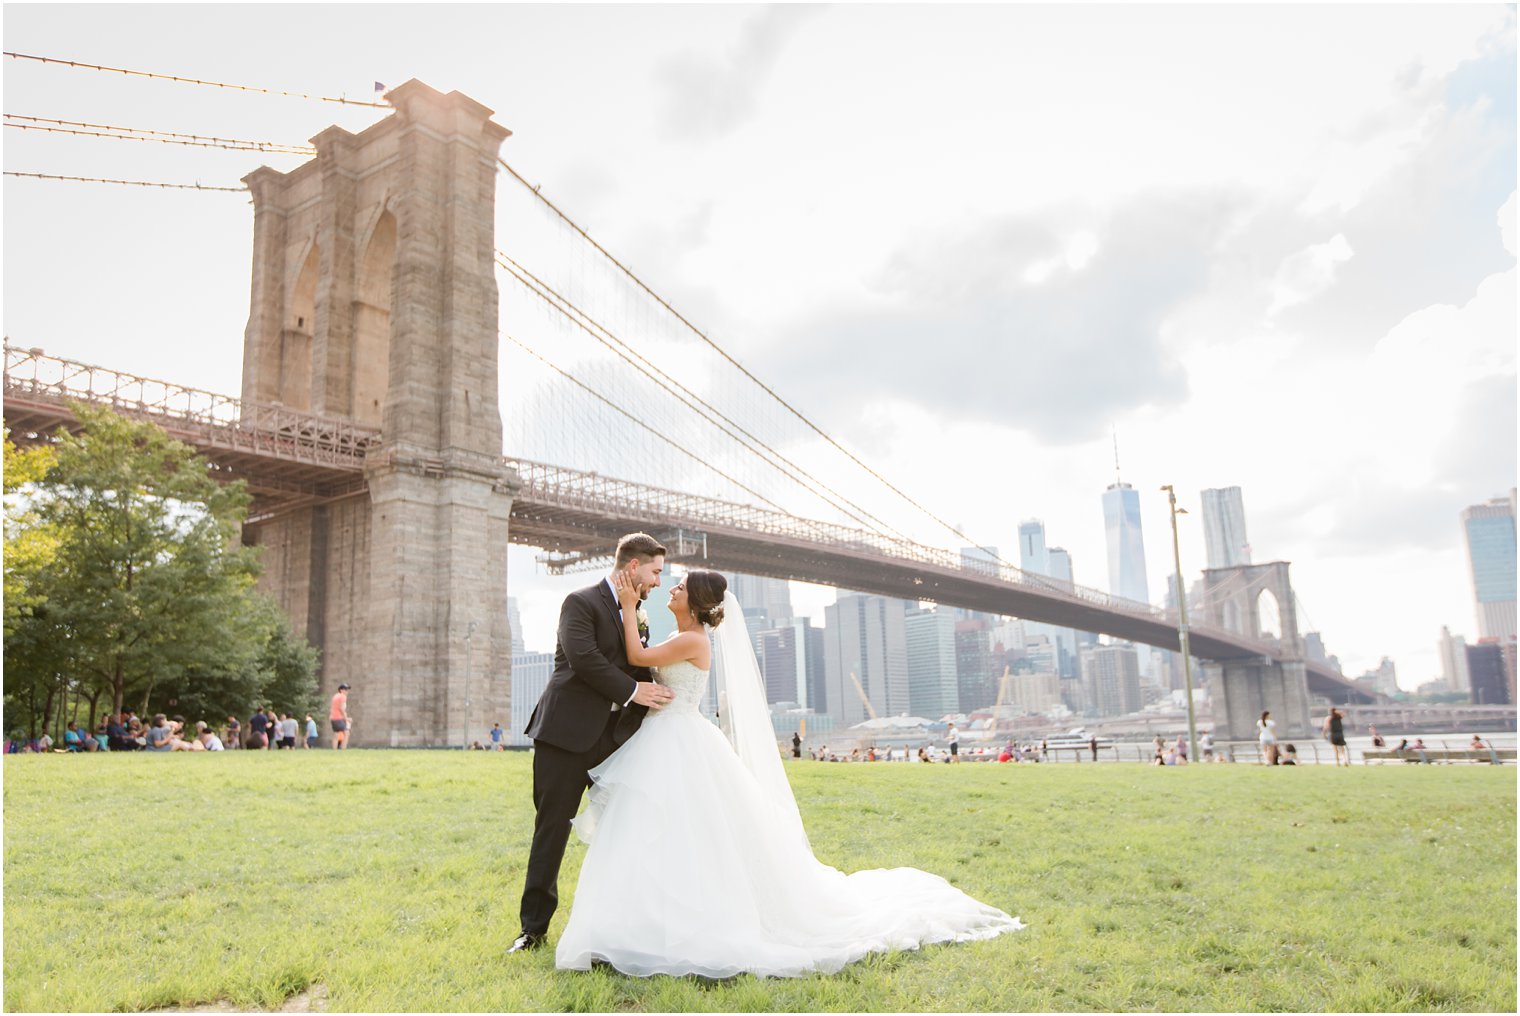 Bride and groom on wedding day at Brooklyn Bridge